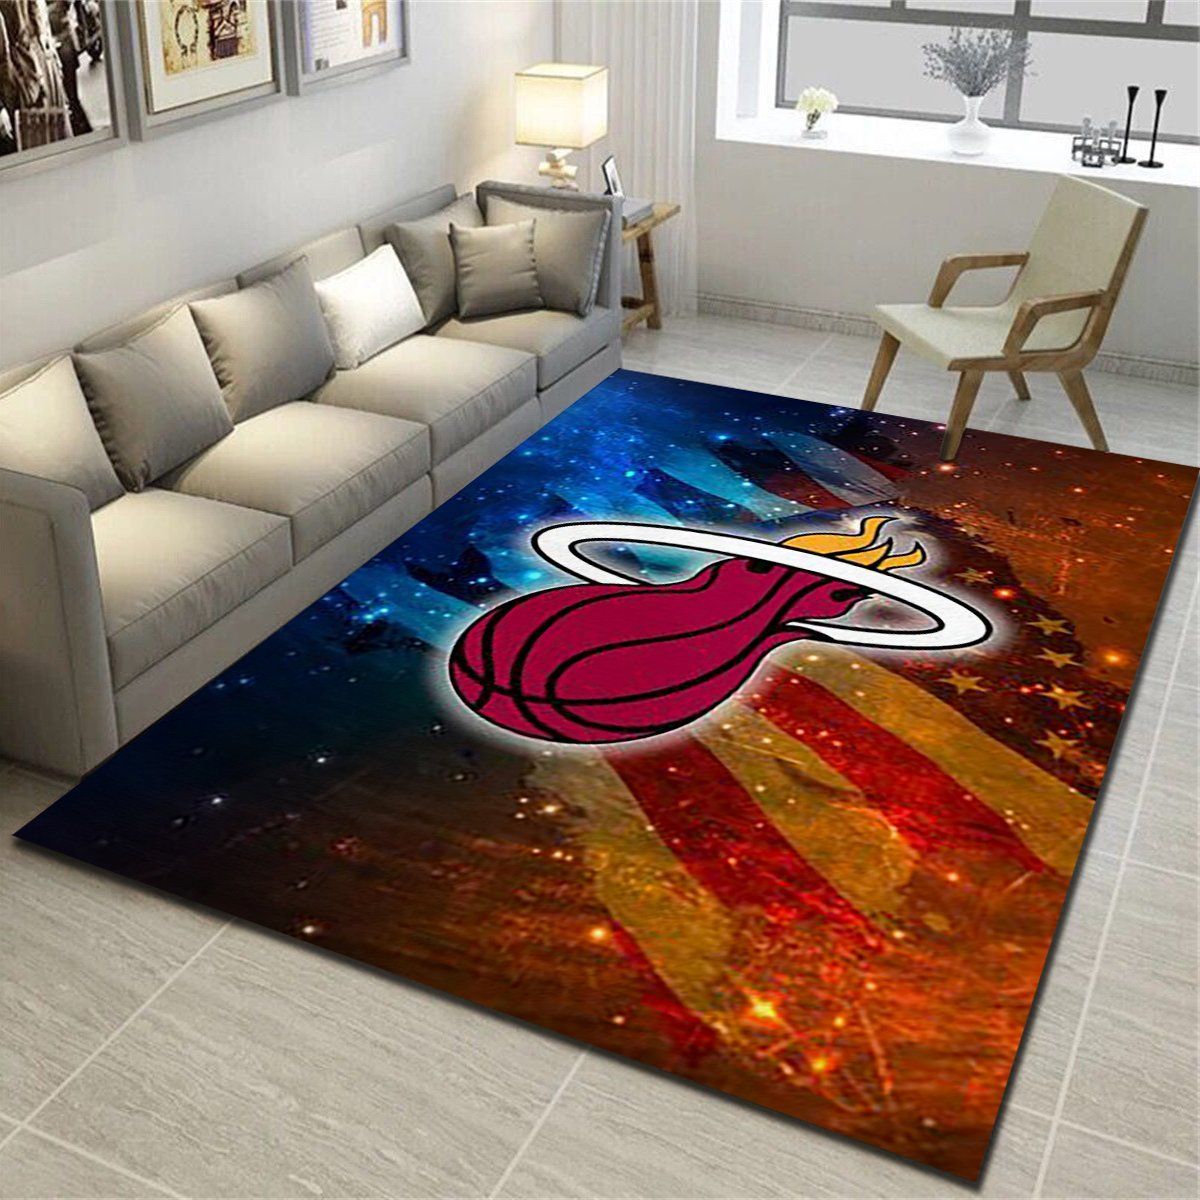 Miami Heat Area Rugs, Basketball Team Living Room Bedroom Carpet, Sports Floor Mat